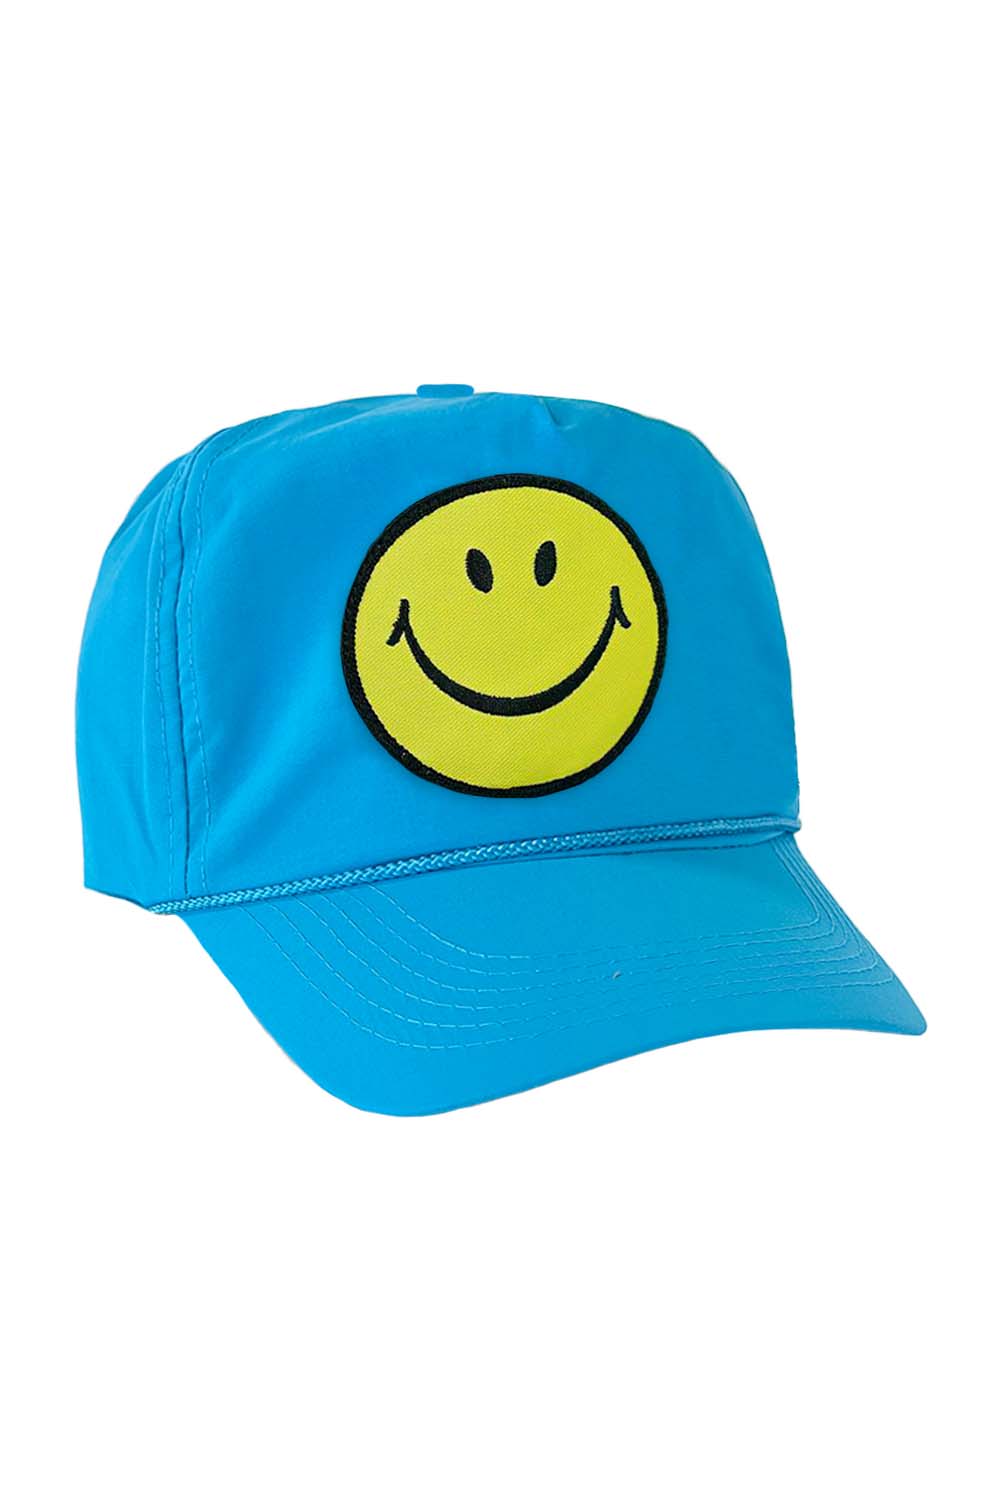 SMILEY - VINTAGE NYLON TRUCKER HAT HATS Aviator Nation LIGHT BLUE 